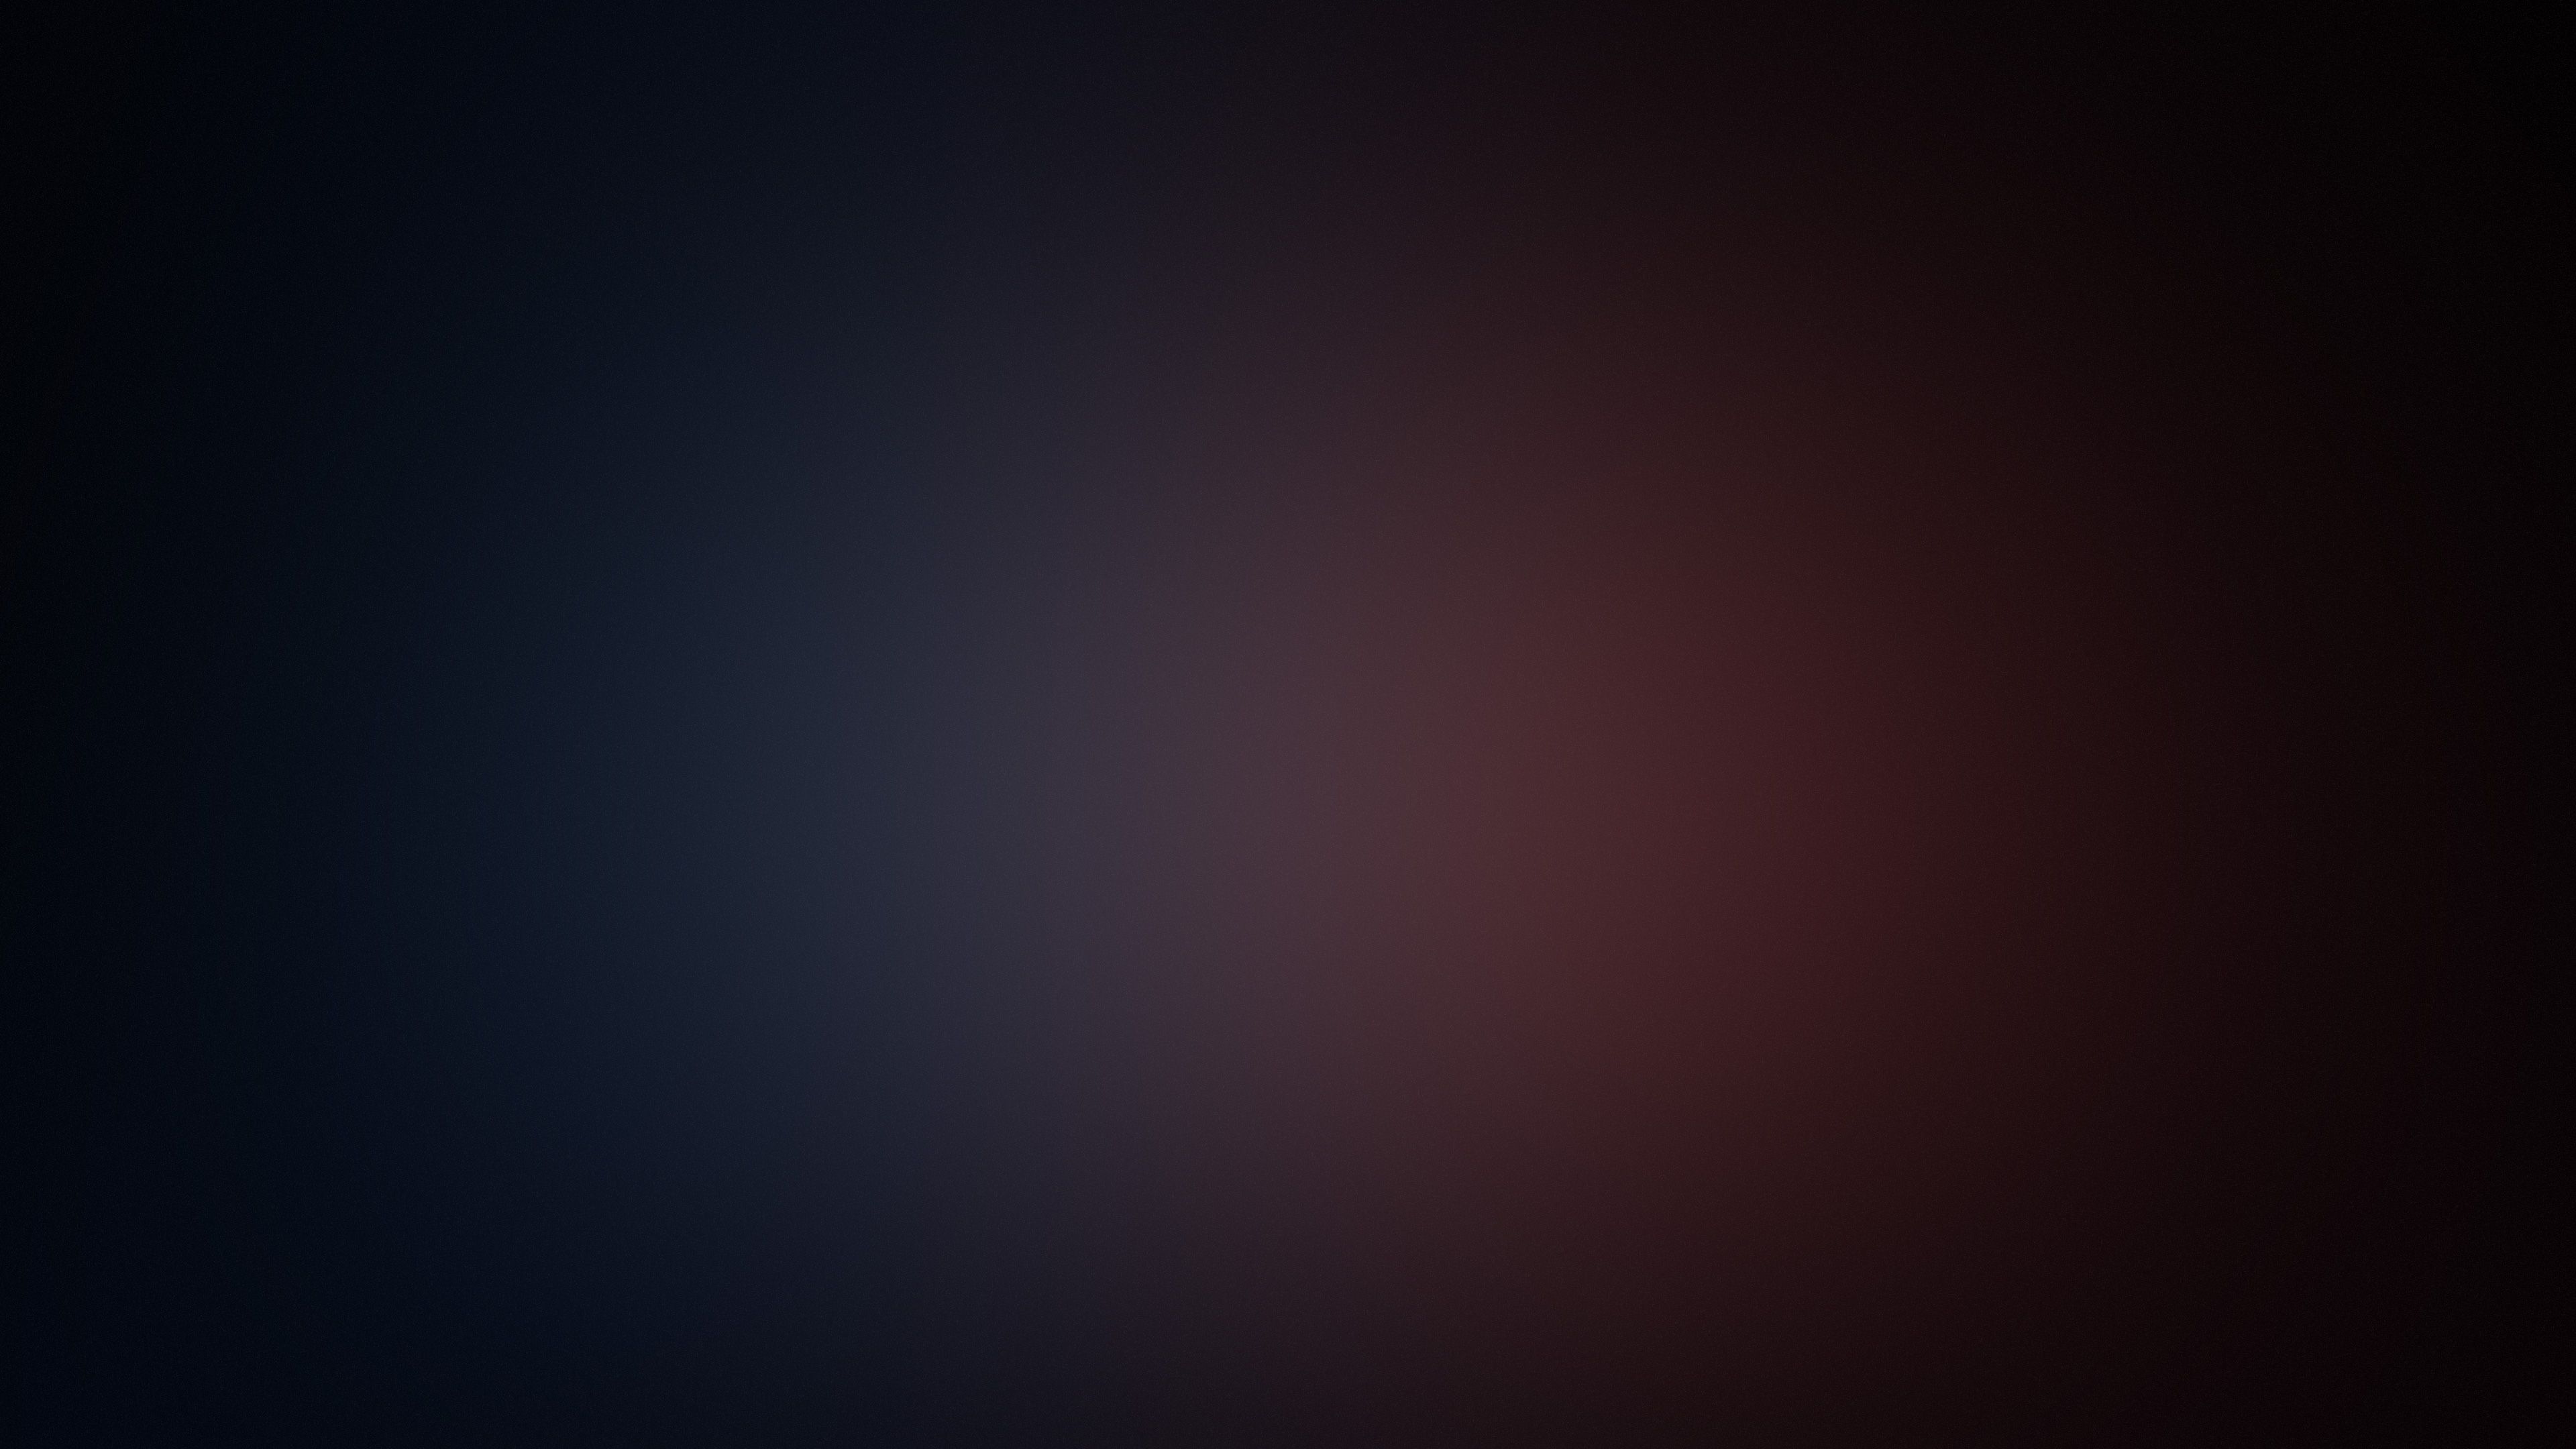 Simple Subtle Abstract Dark Minimalism 4k, HD Artist, 4k